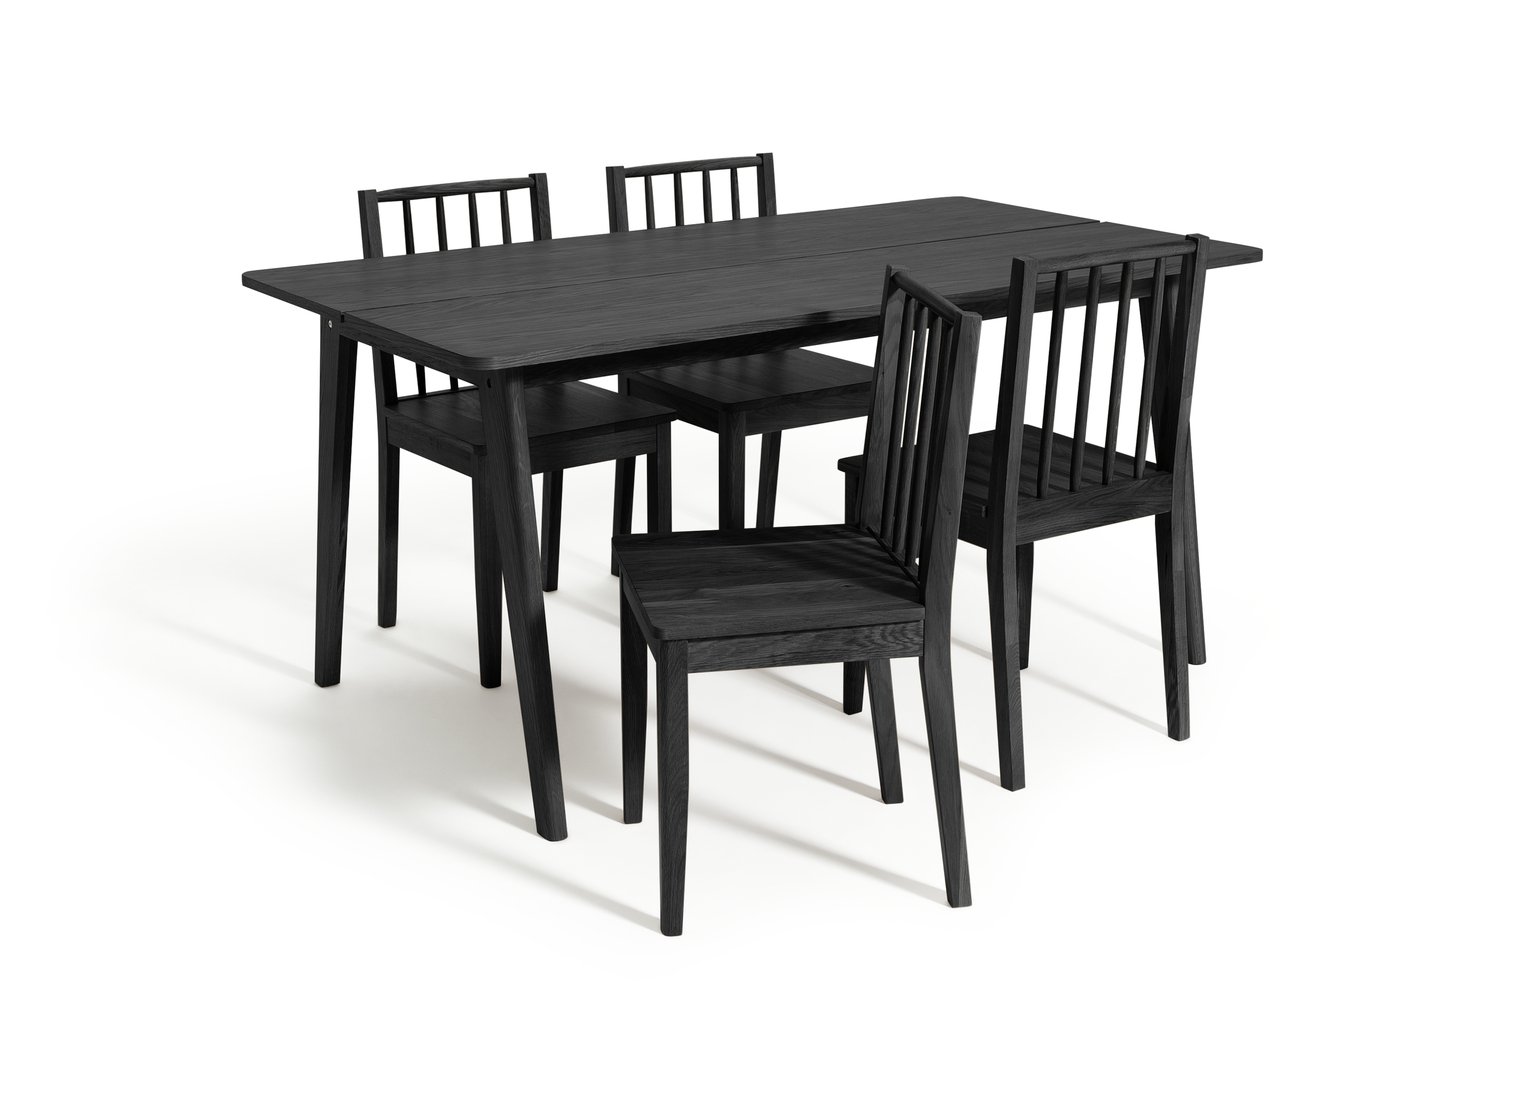 Habitat Nel Wood Dining Table & 4 Black Chairs